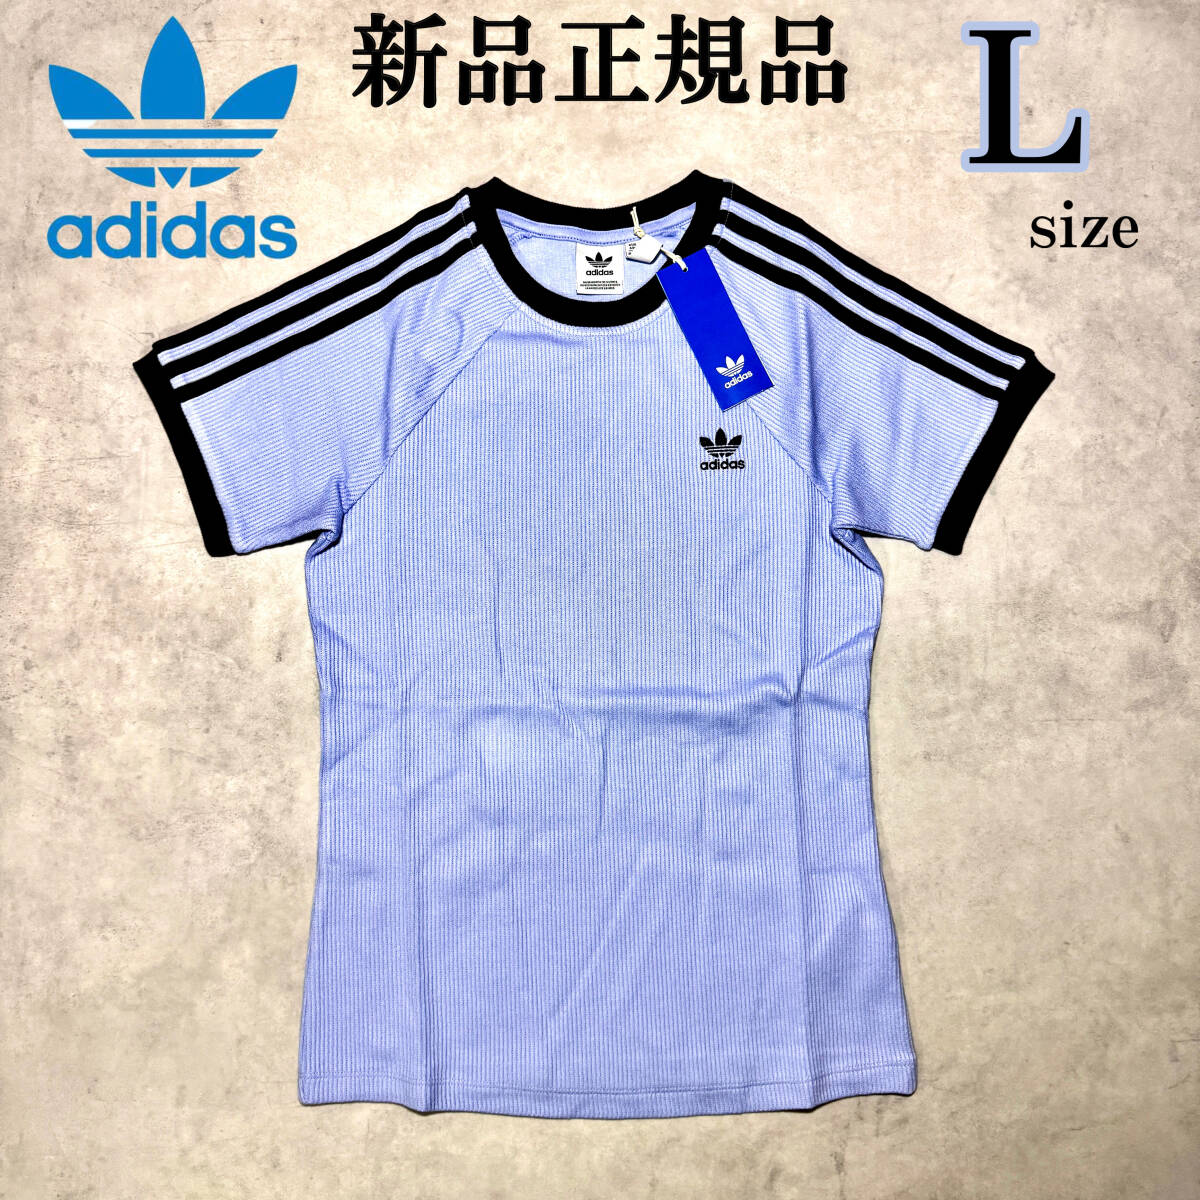  new goods Lsize Adidas Originals short sleeves waffle T-shirt light blue adidas originals Korea K-POP Trend embroidery stripe summer tight 